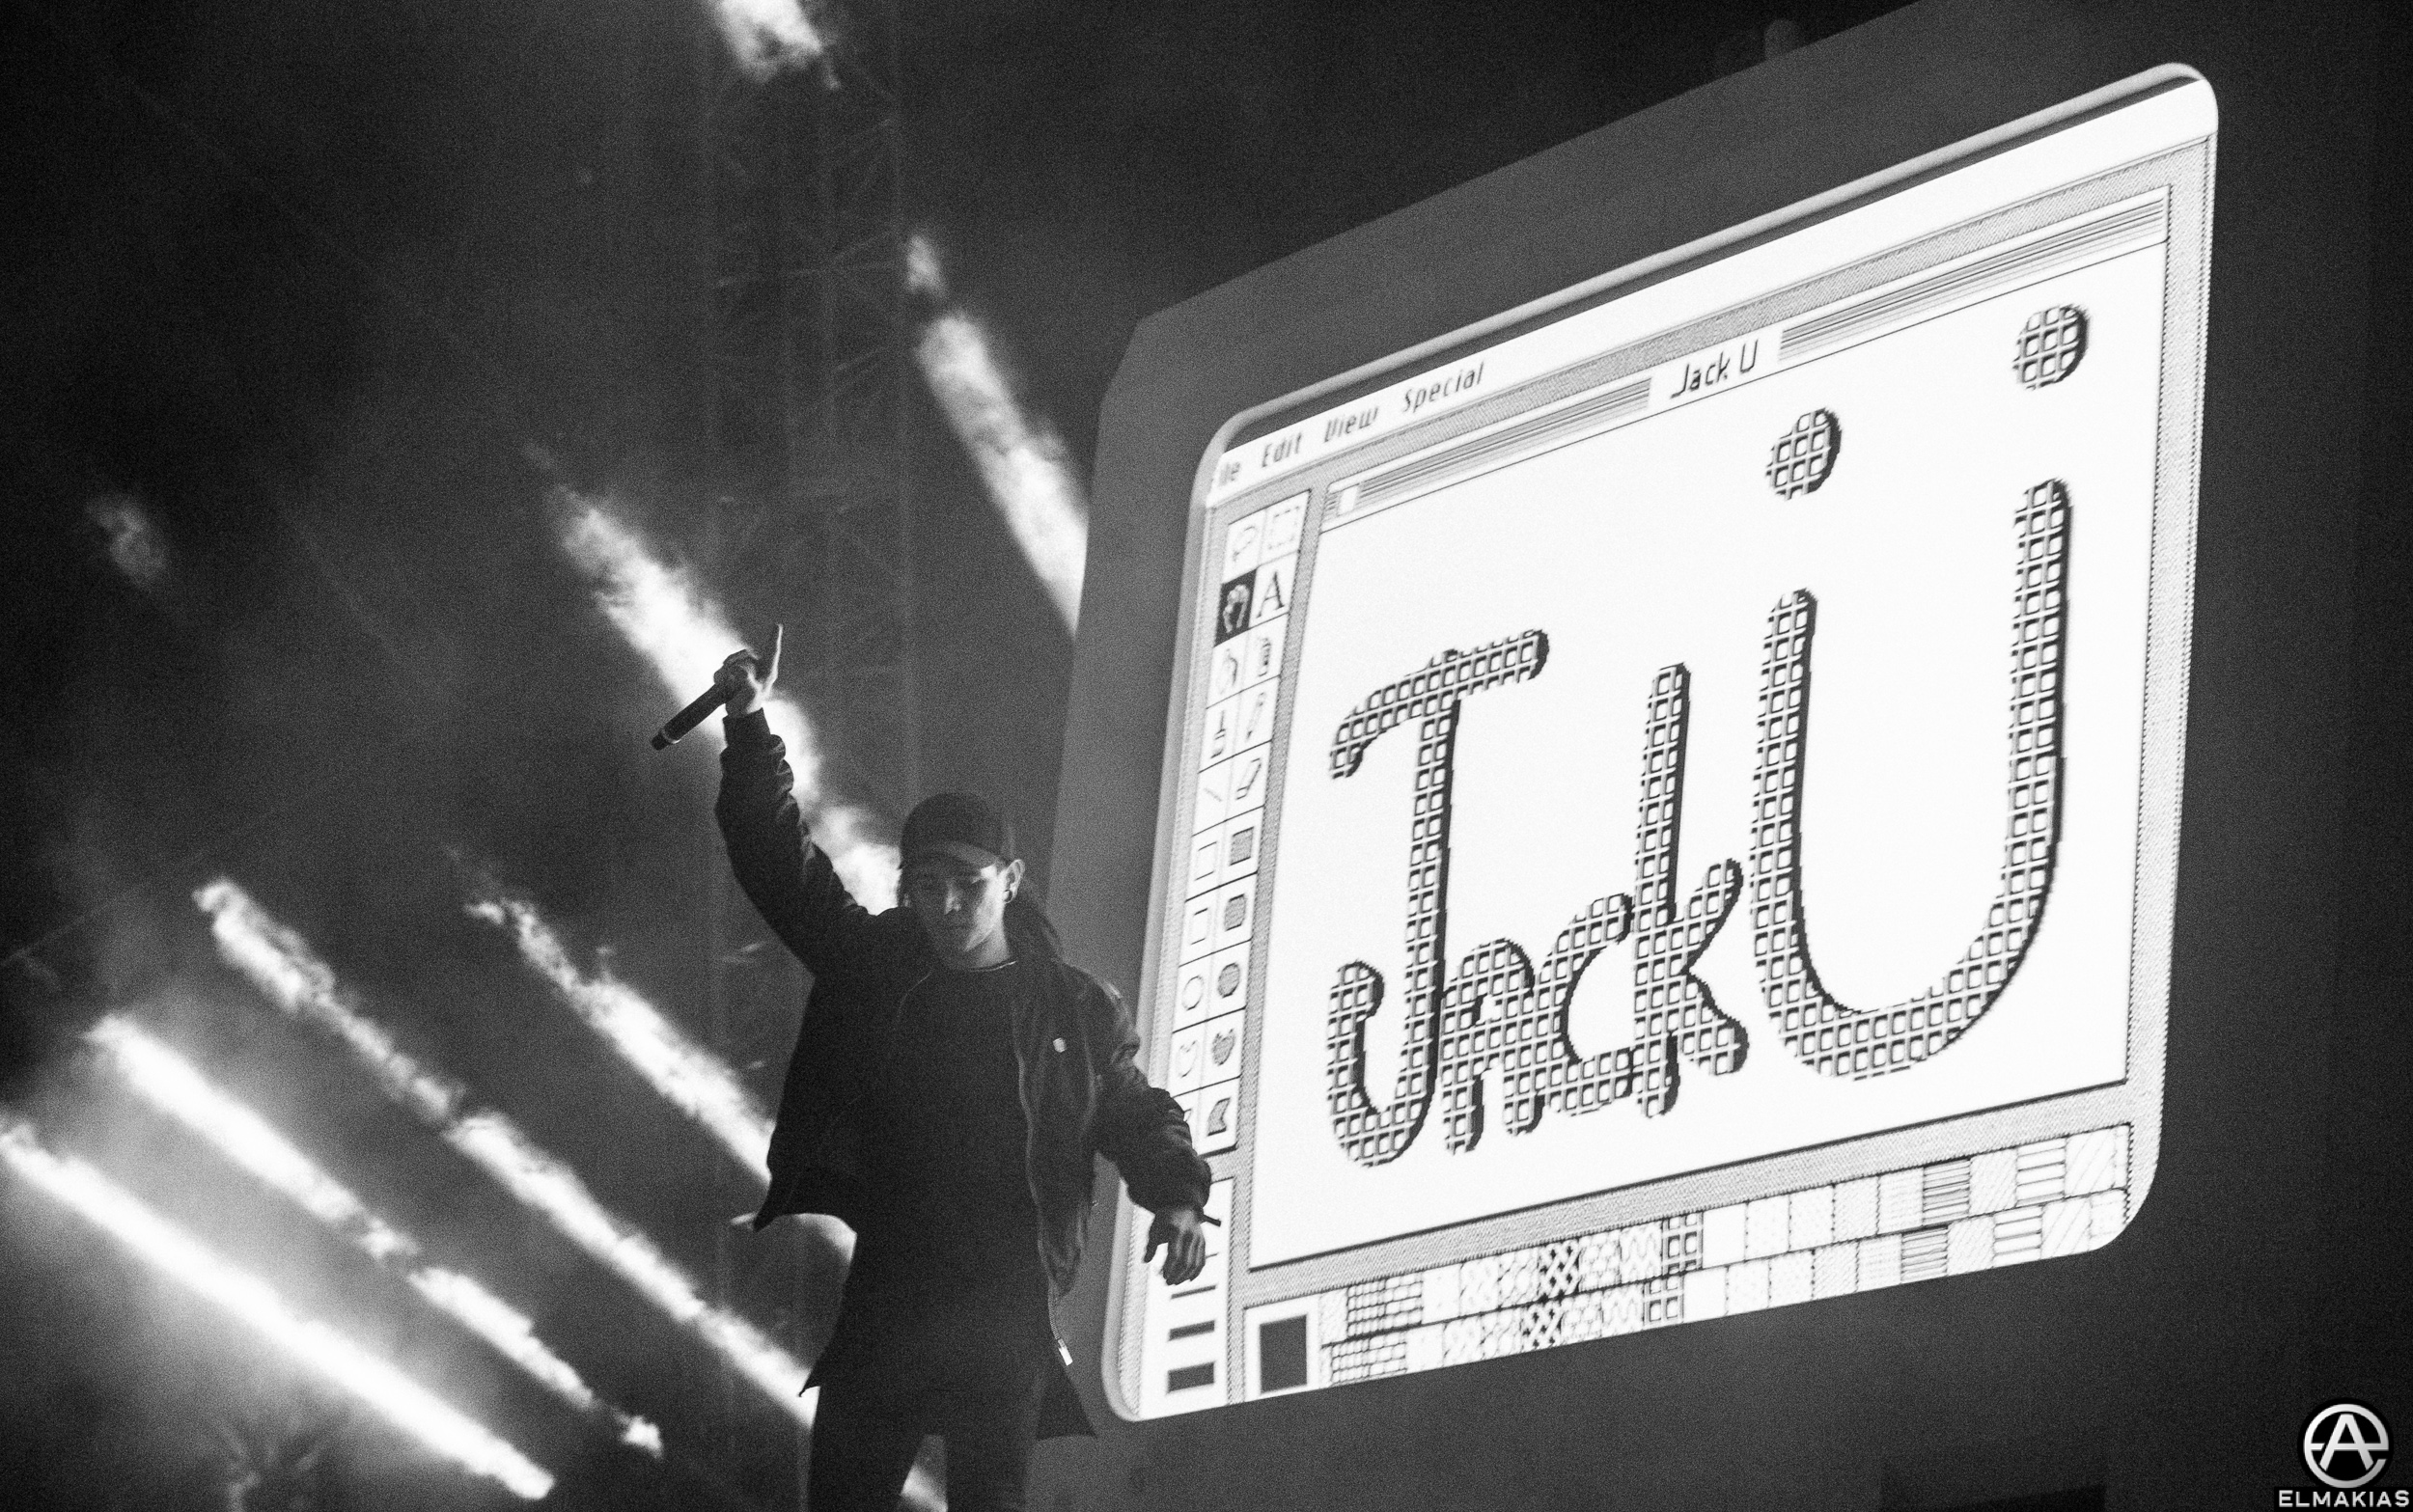 Jack U at Coachella 2016 by Adam Elmakias